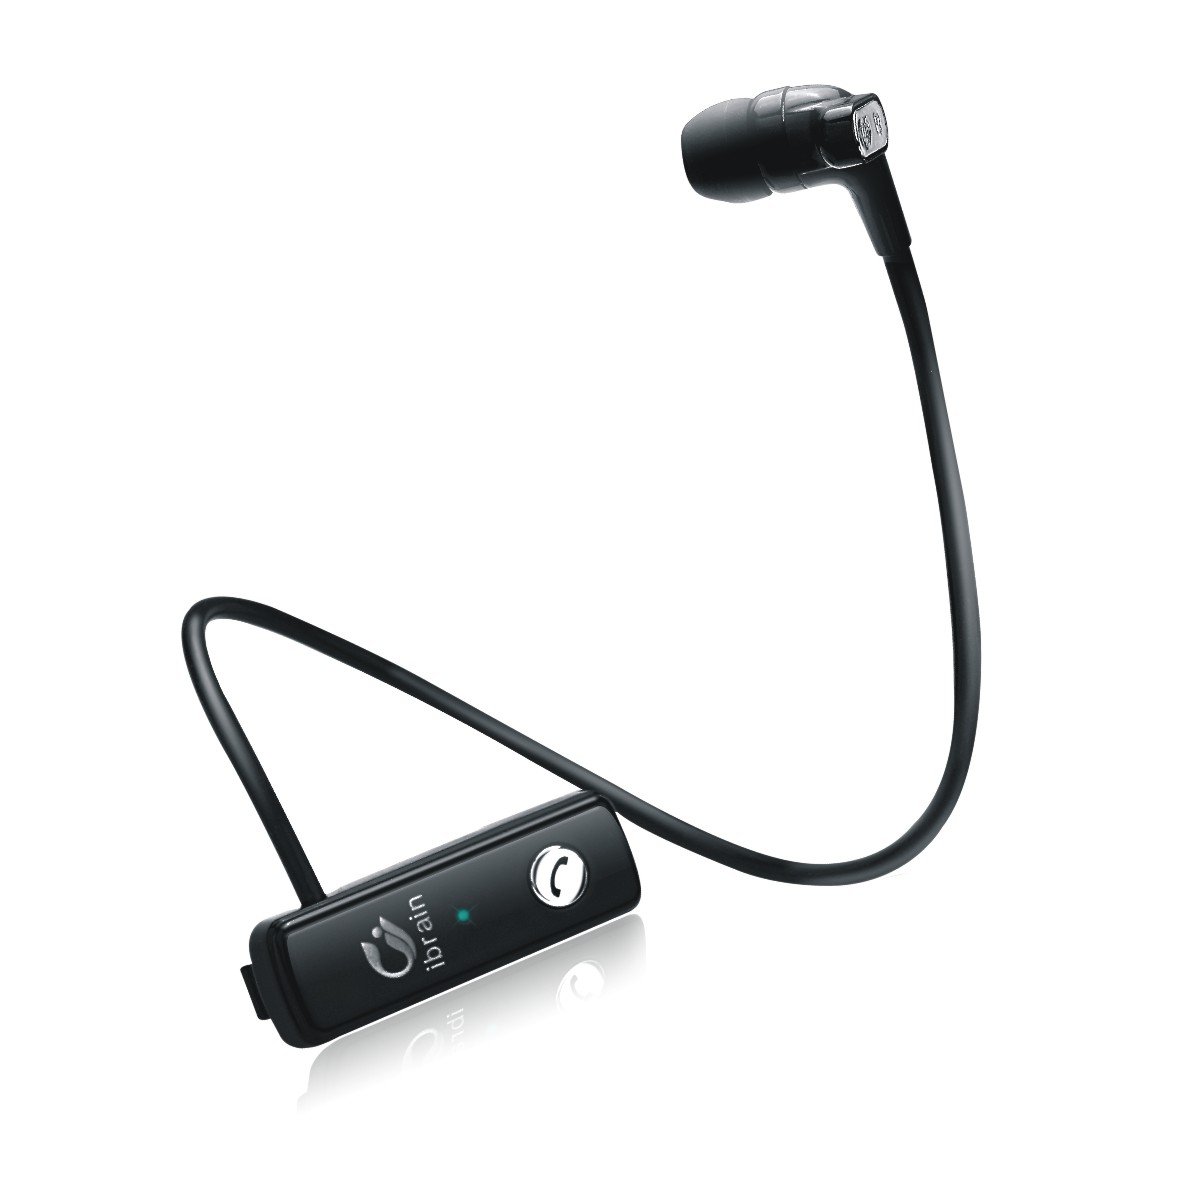 V3.0 wireless bluetooth earphone air tube headsets radiation protection headphones